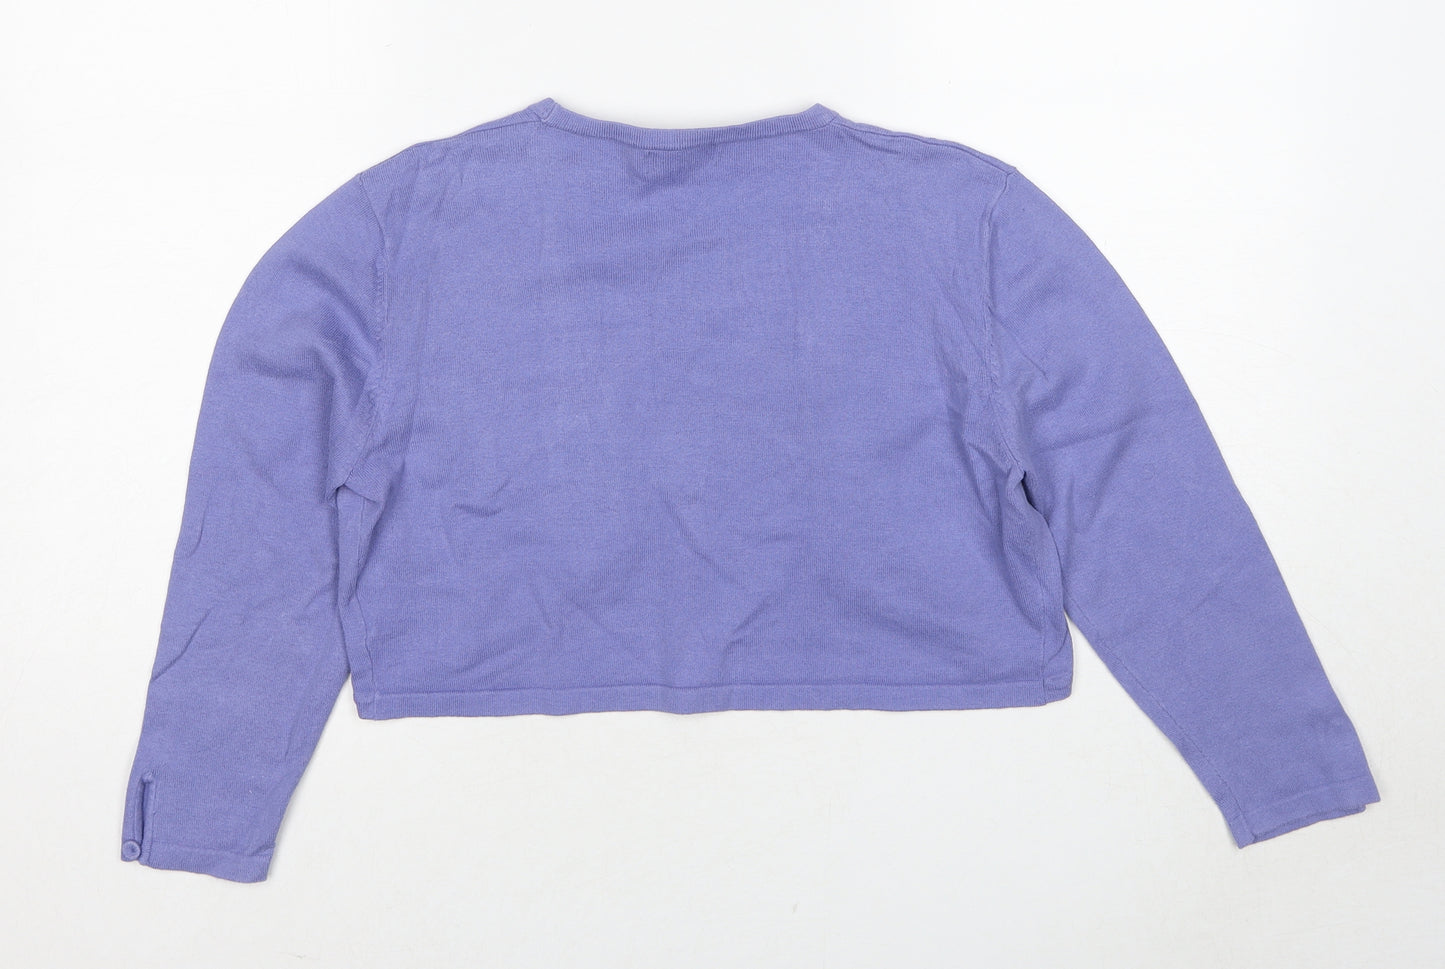 Pomodoro Womens Purple V-Neck Cotton Shrug Jumper Size 12